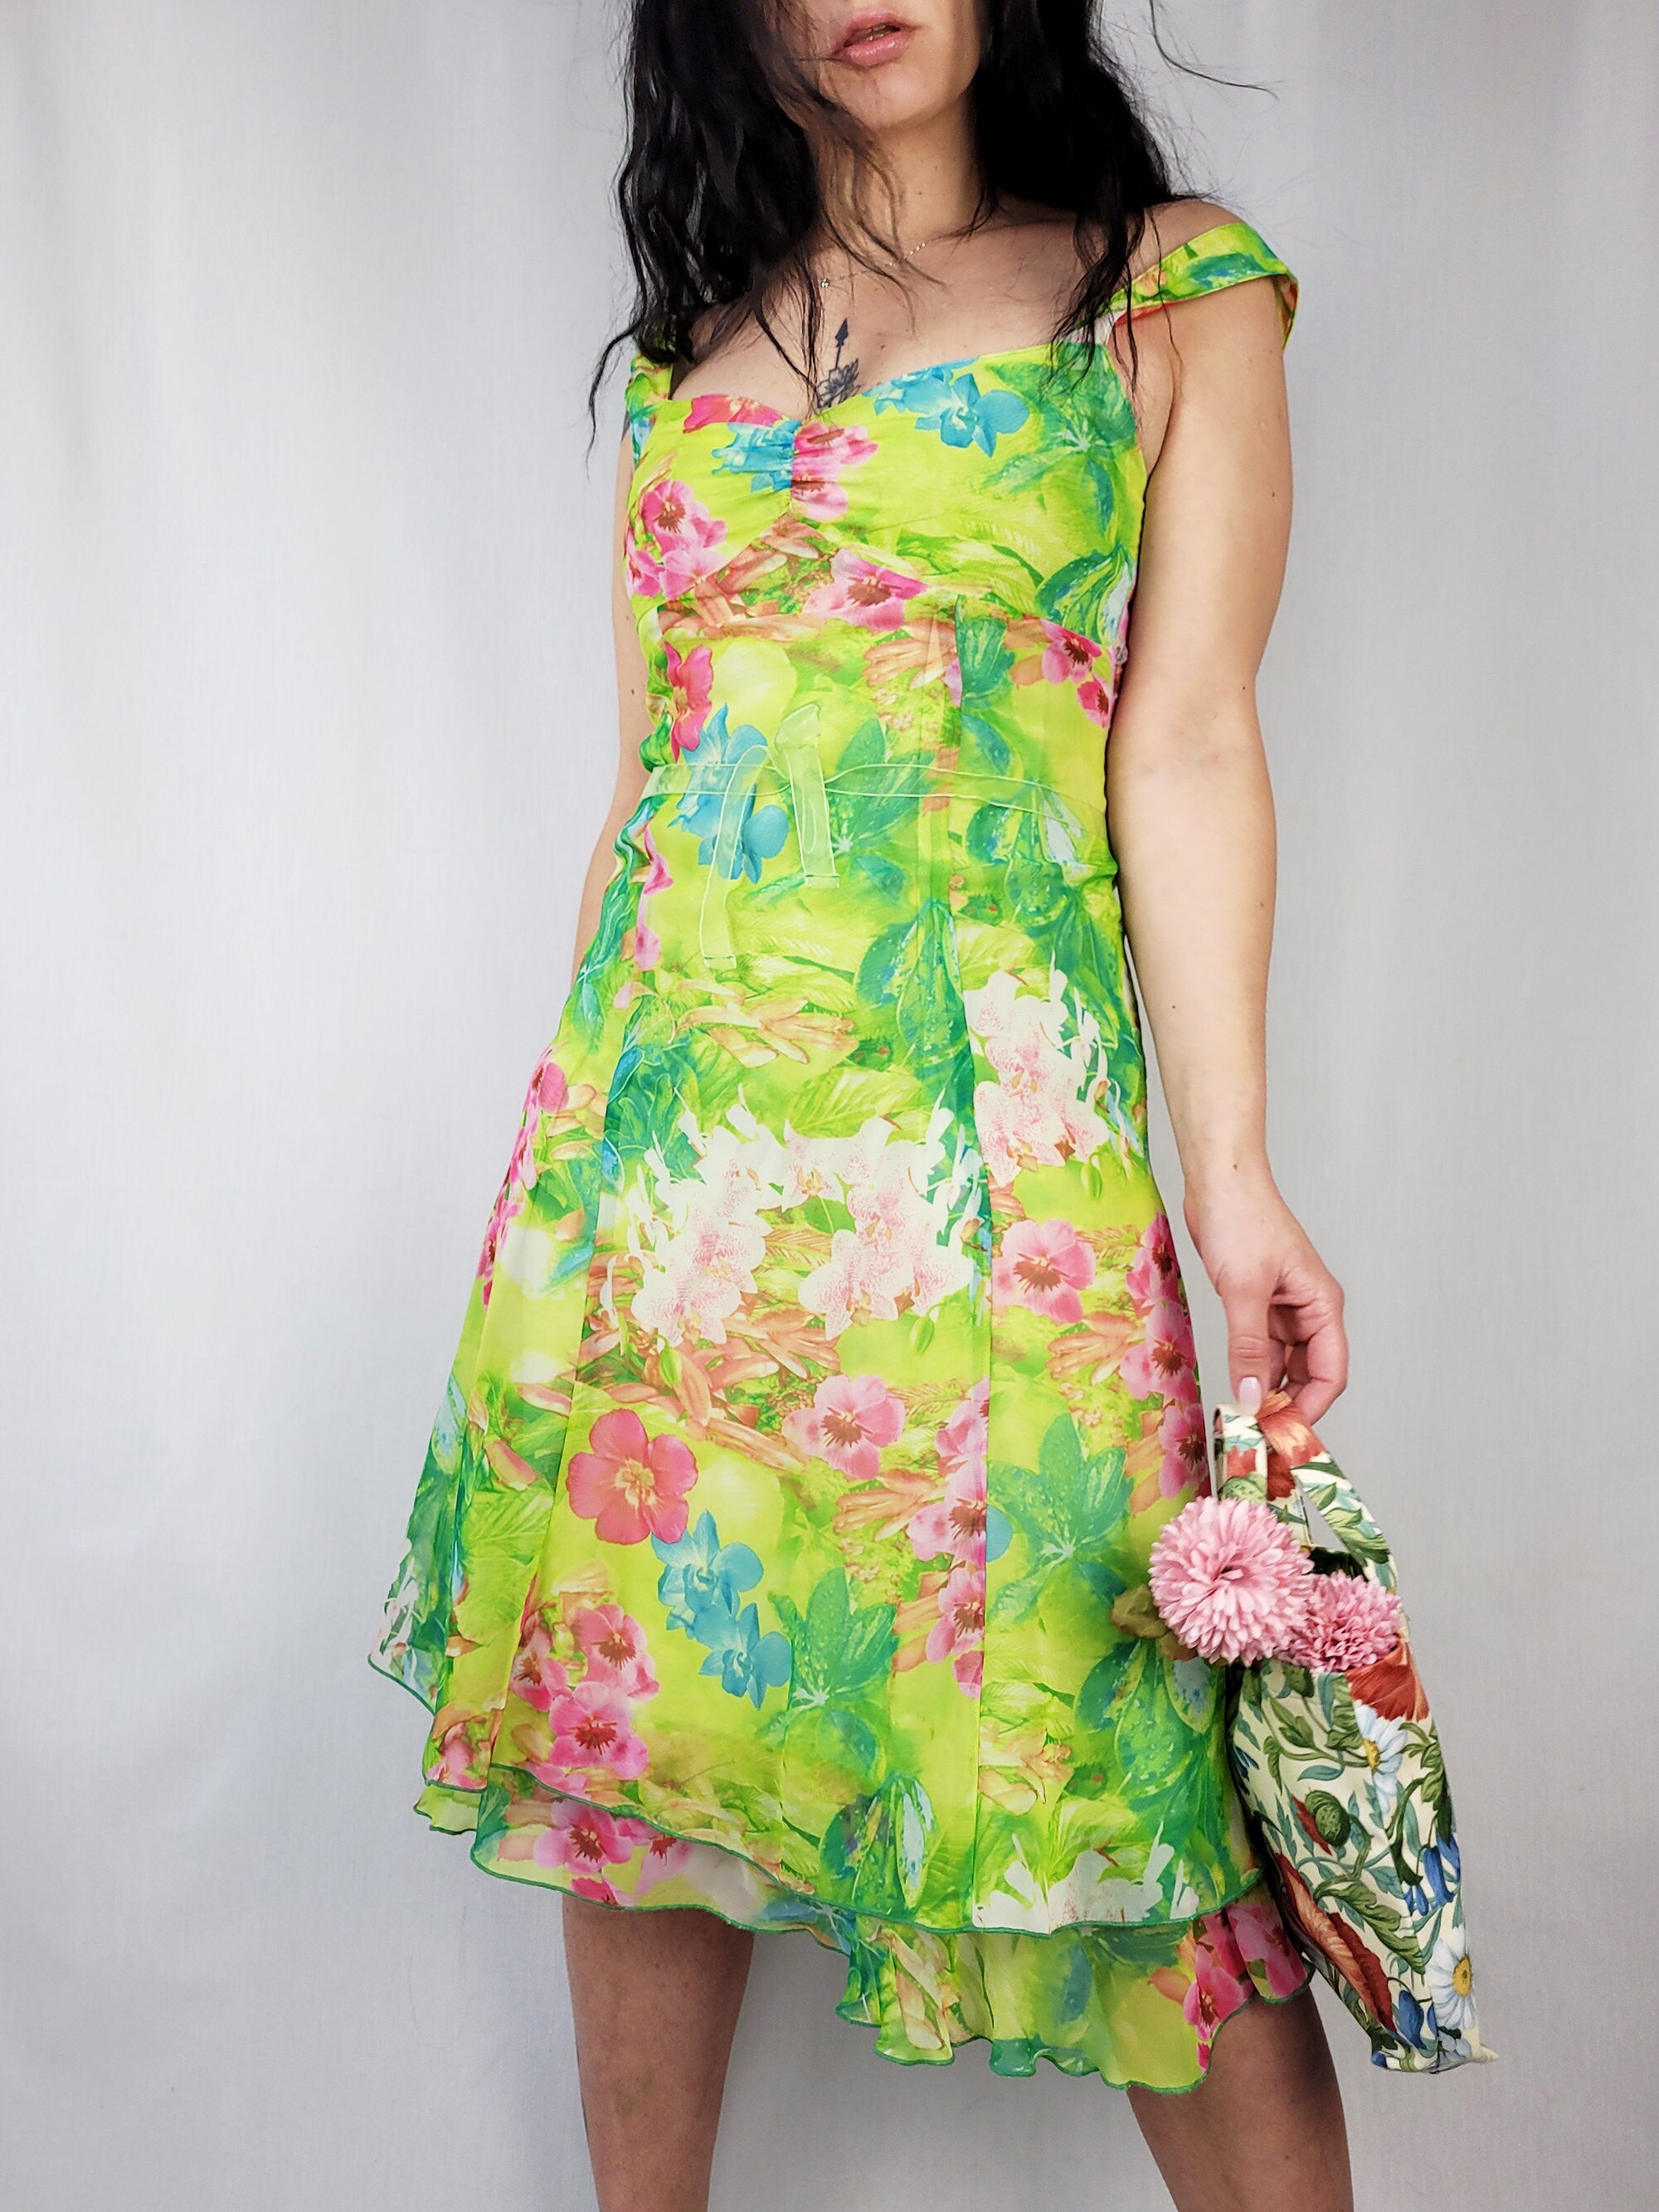 Vintage 90s green colorful floral chiffon summer slip dress